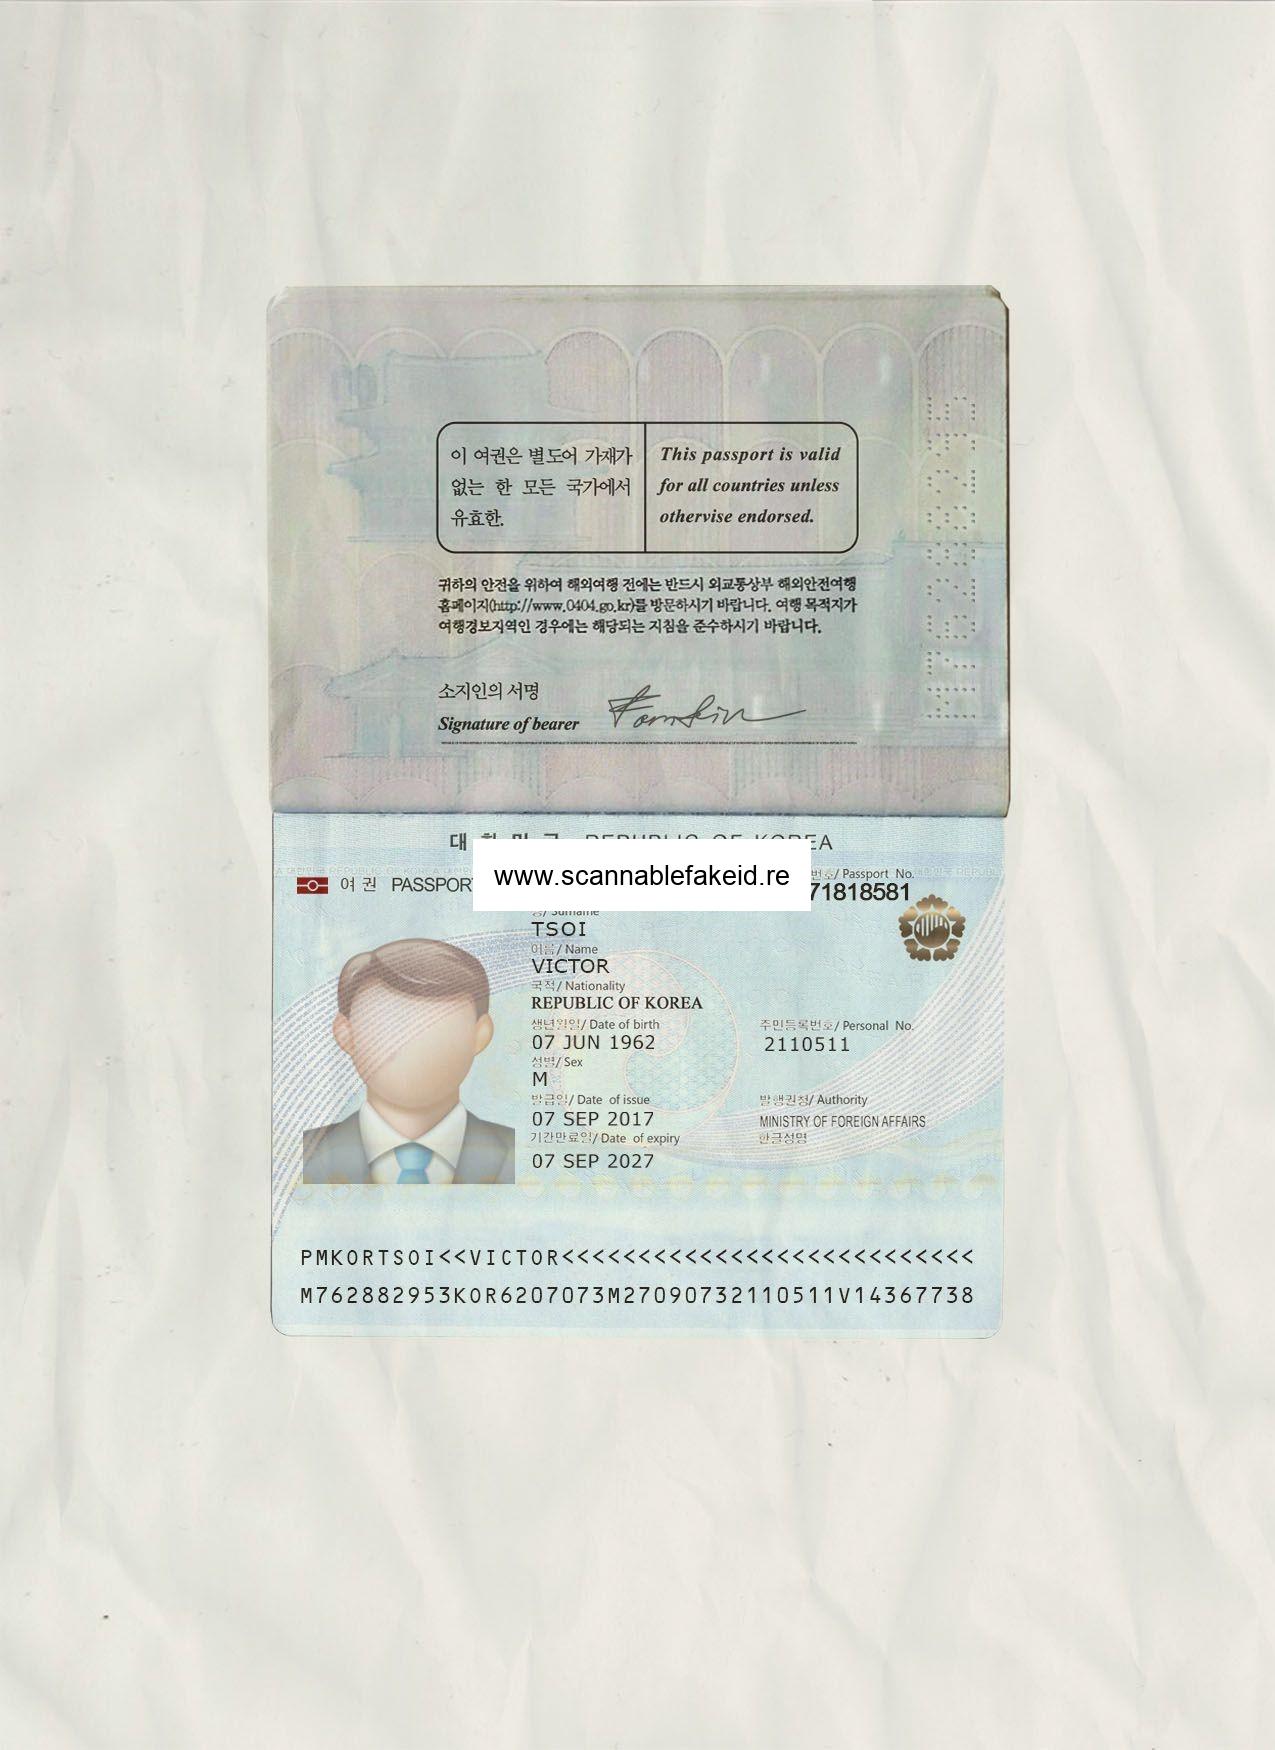 South Korea Fake Passport - Buy Scannable Fake ID Online - Fake Drivers ...